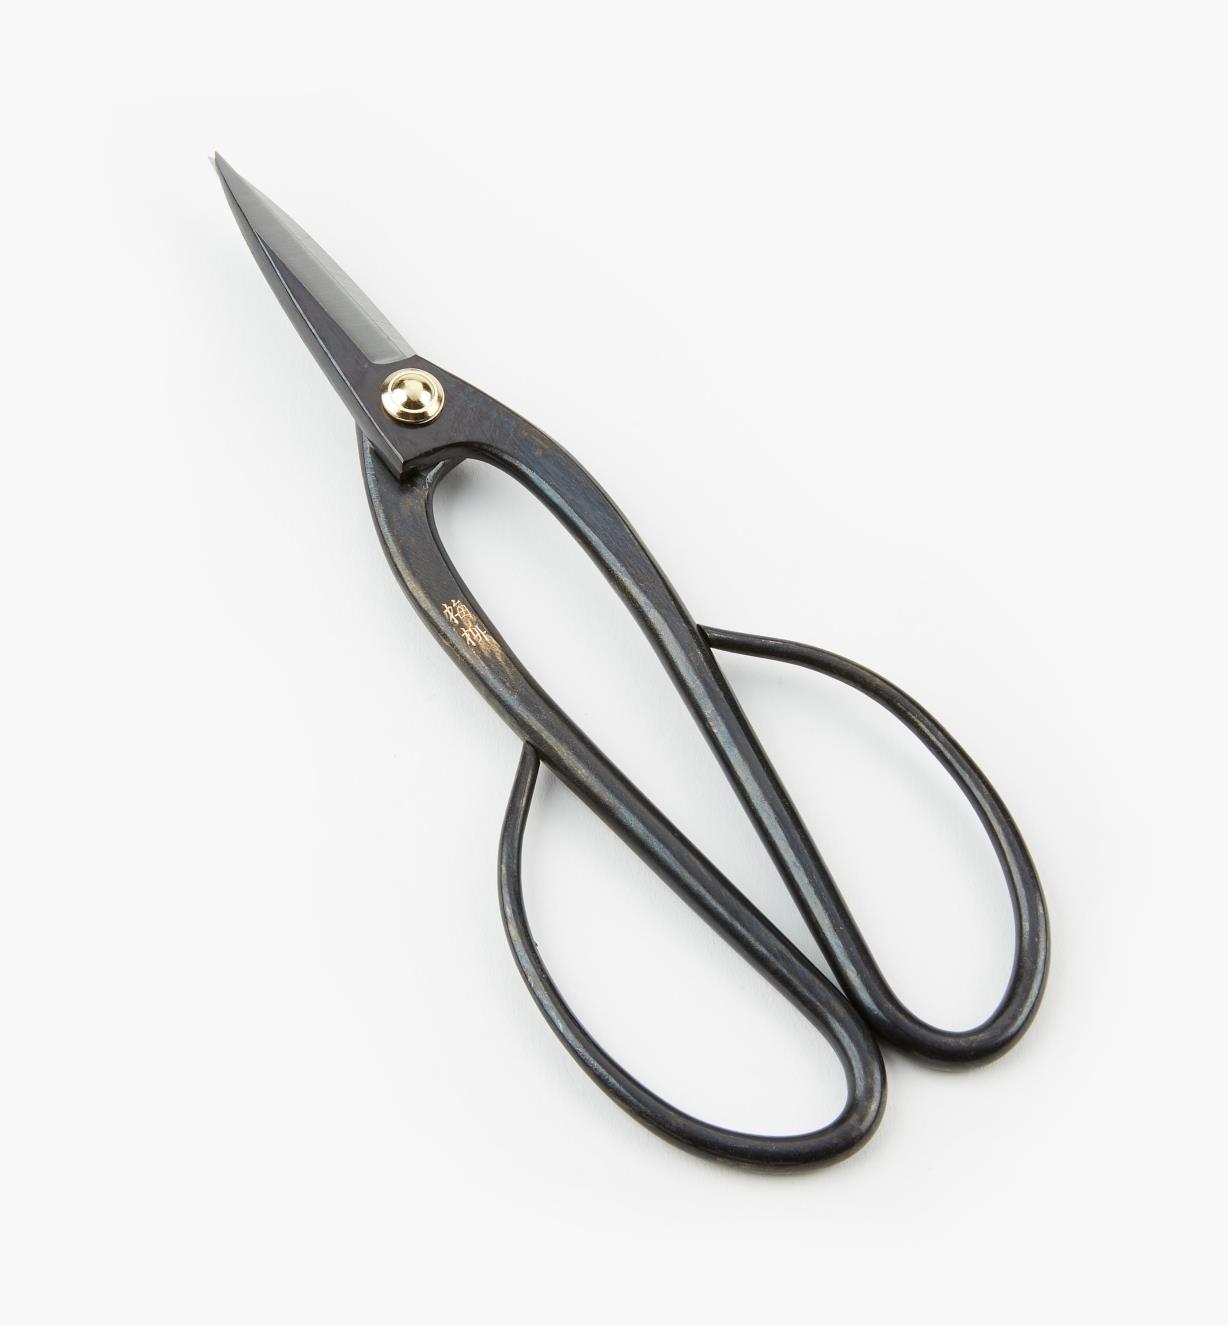 Japanese Bonsai 3.5/" Pruning Shears Scissors NEW